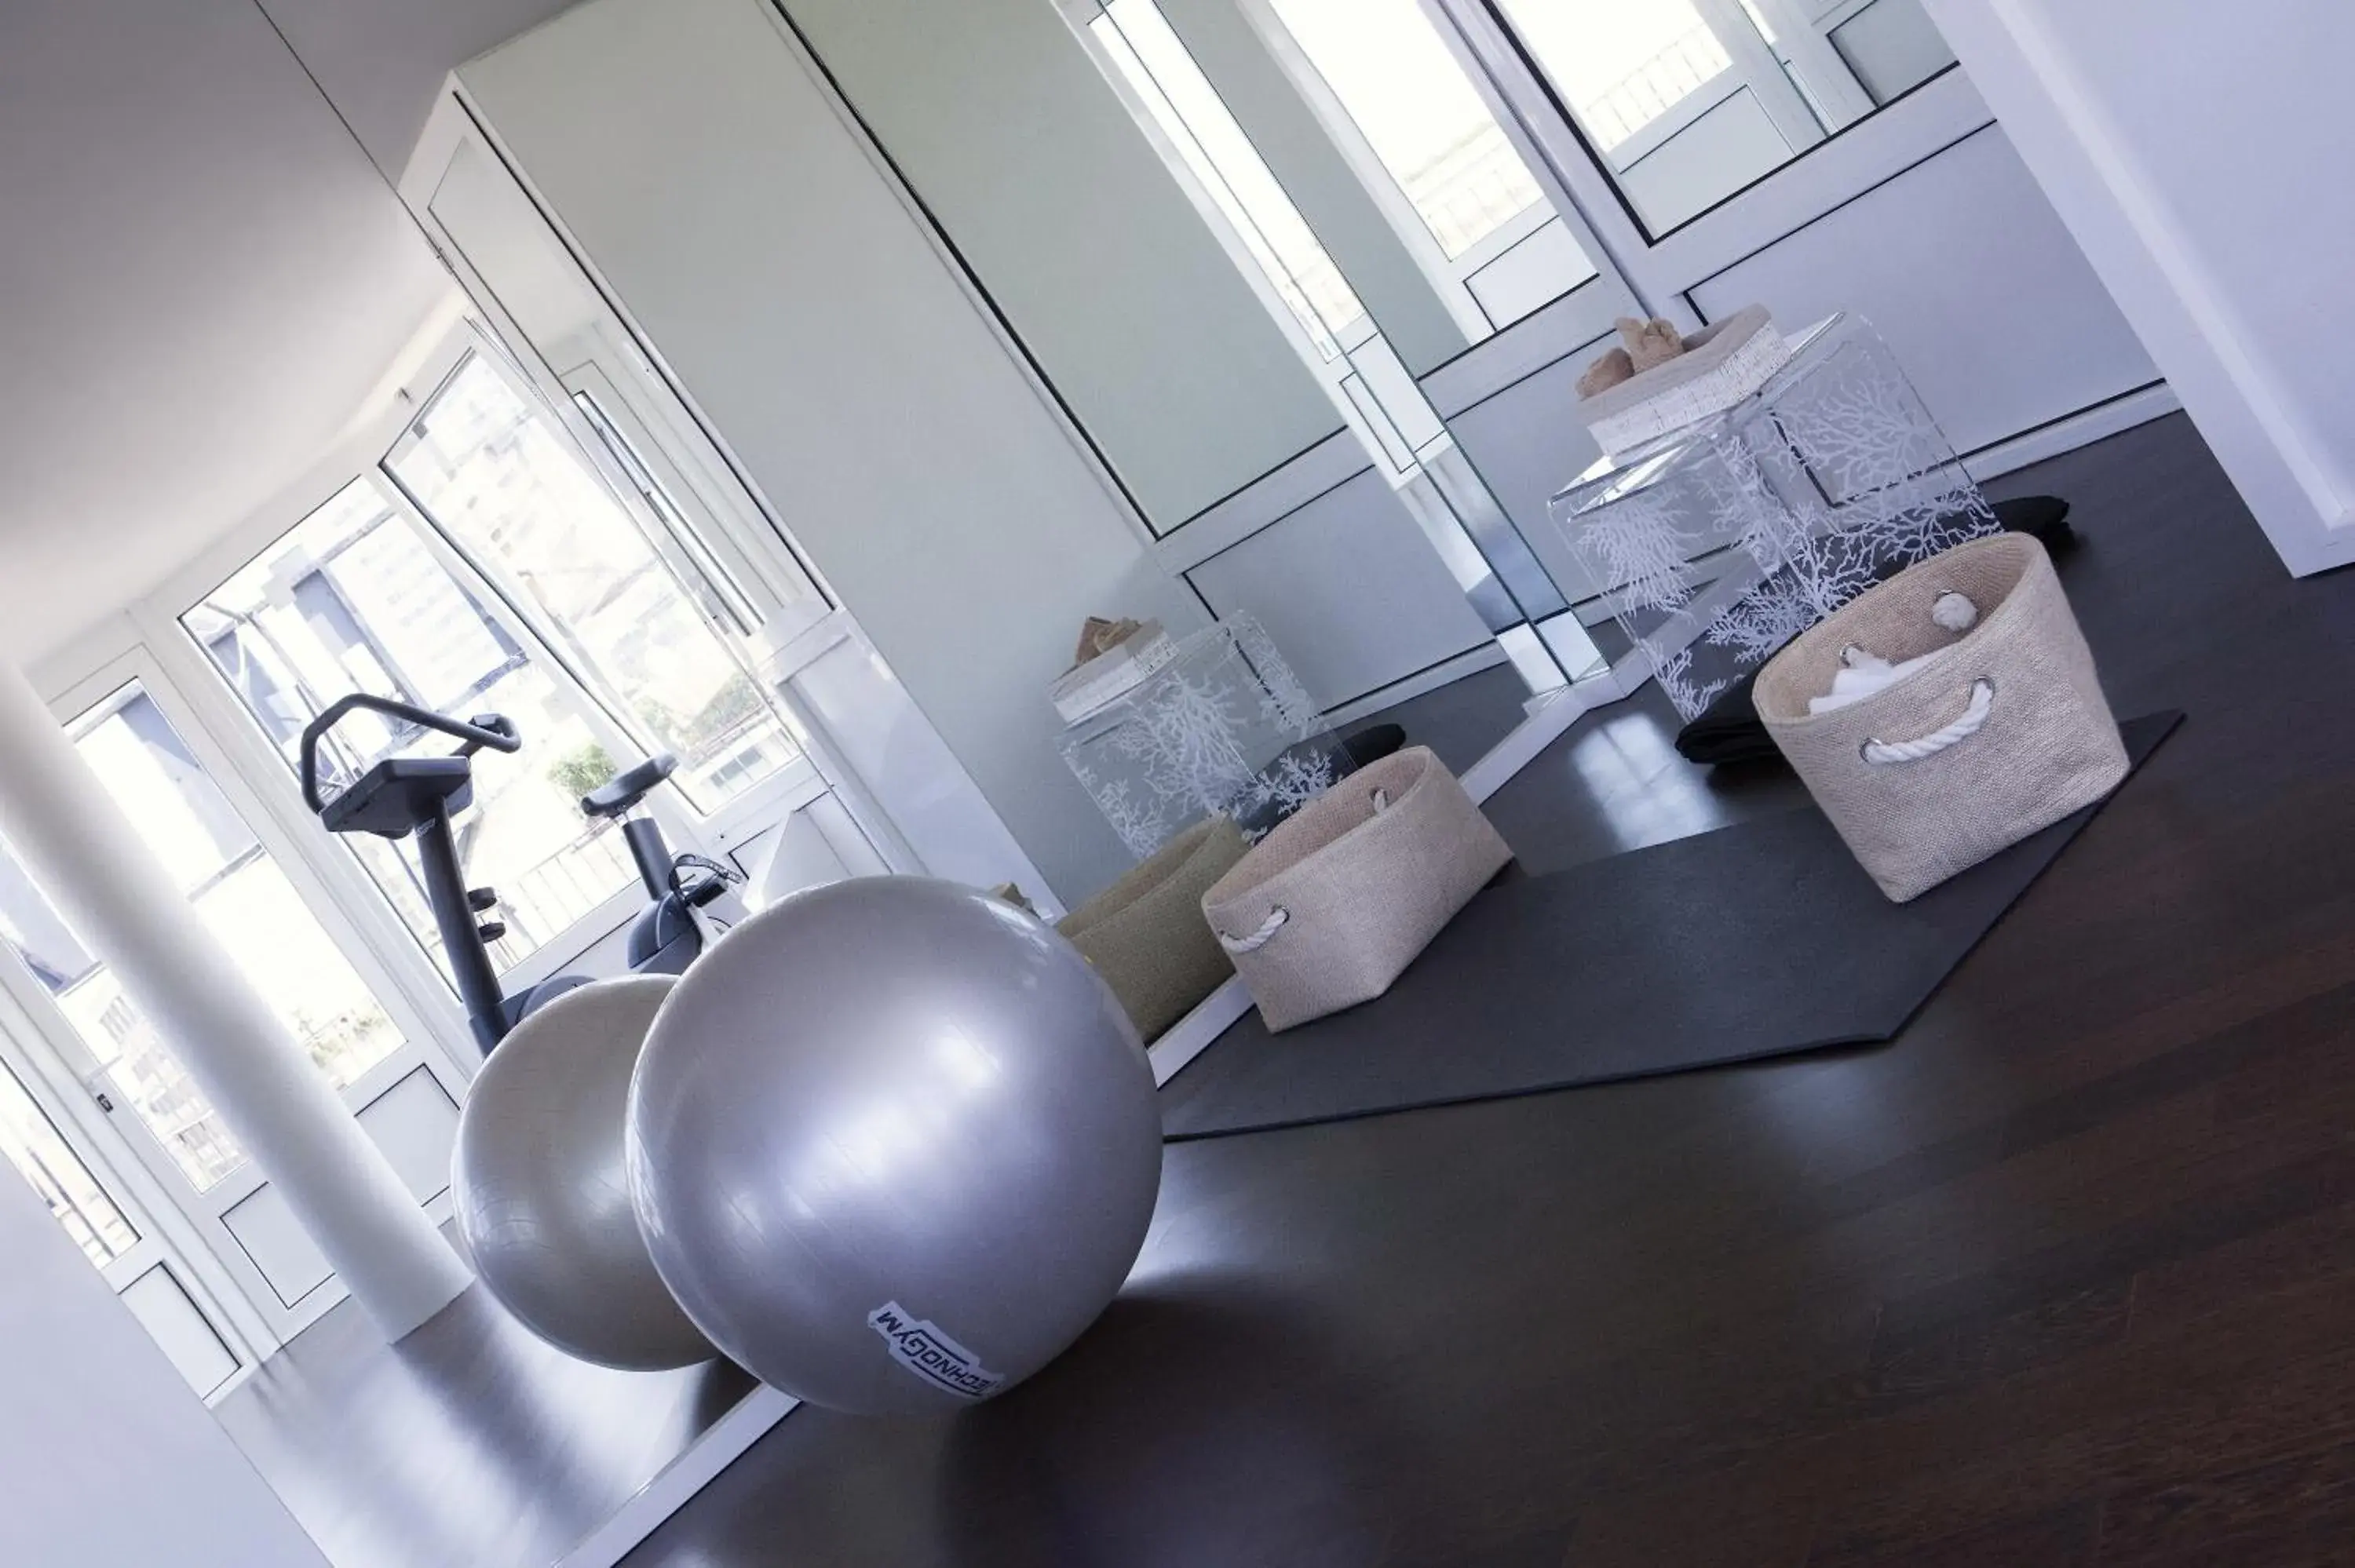 Fitness centre/facilities, Bathroom in Hotel Mennini